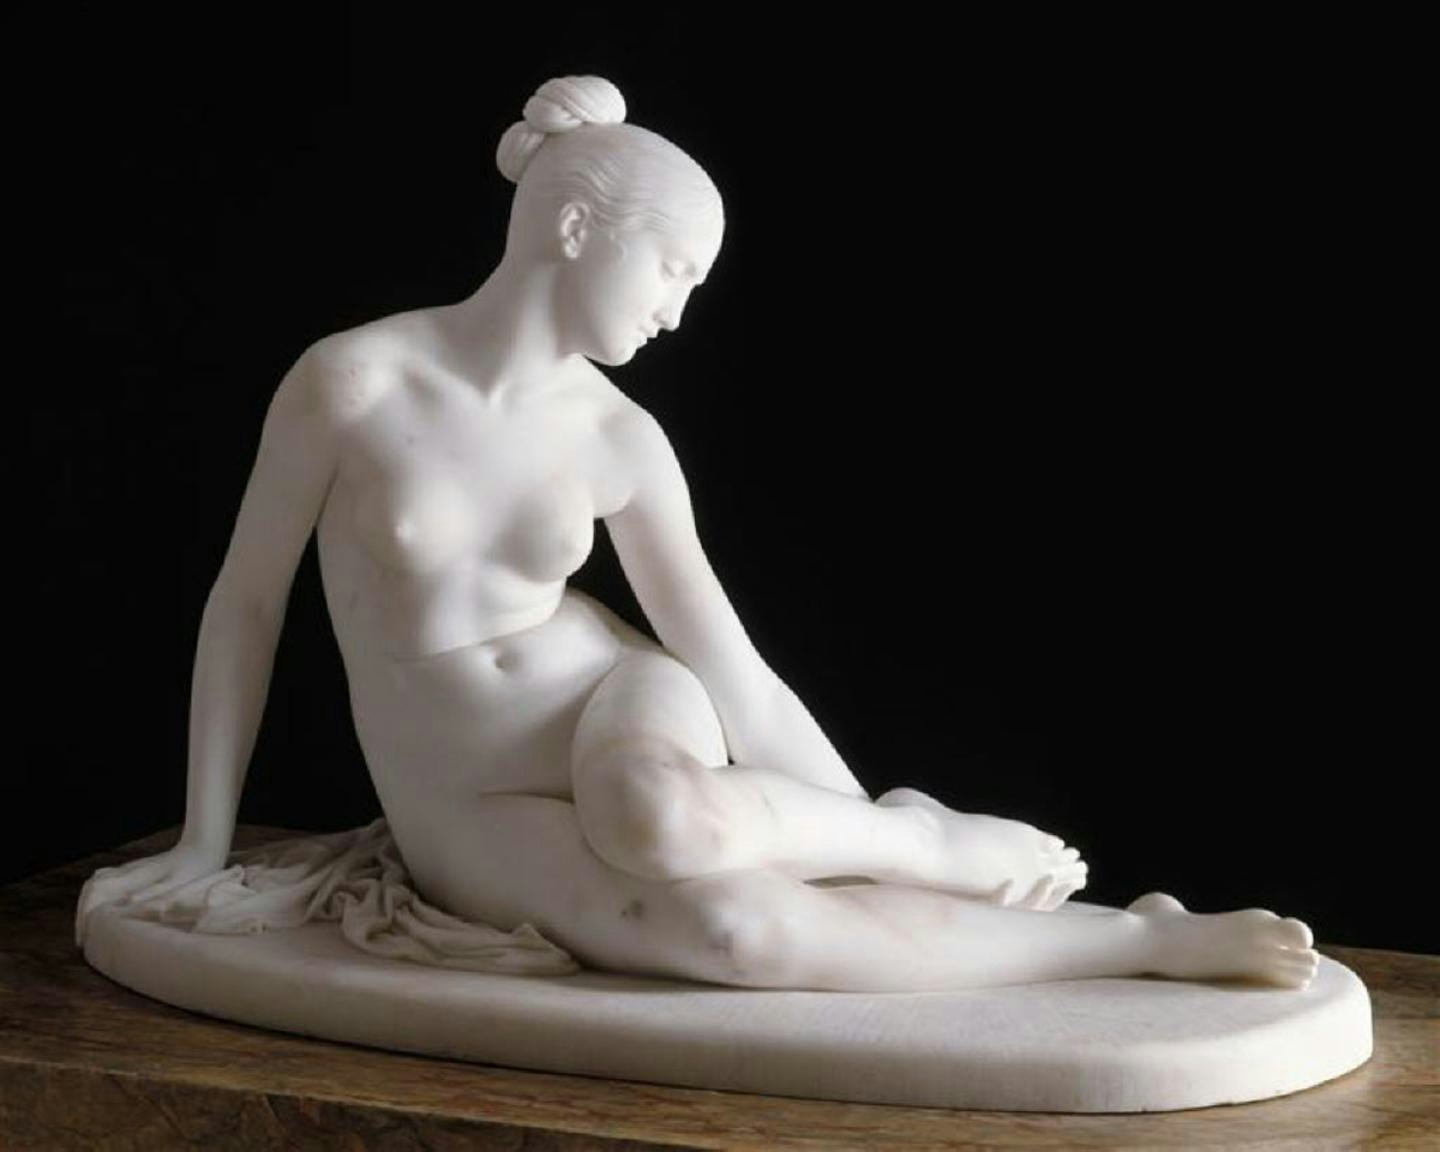 The sculpture La Nymphe au scorpion by Lorenzo Bartolini at the Louvre